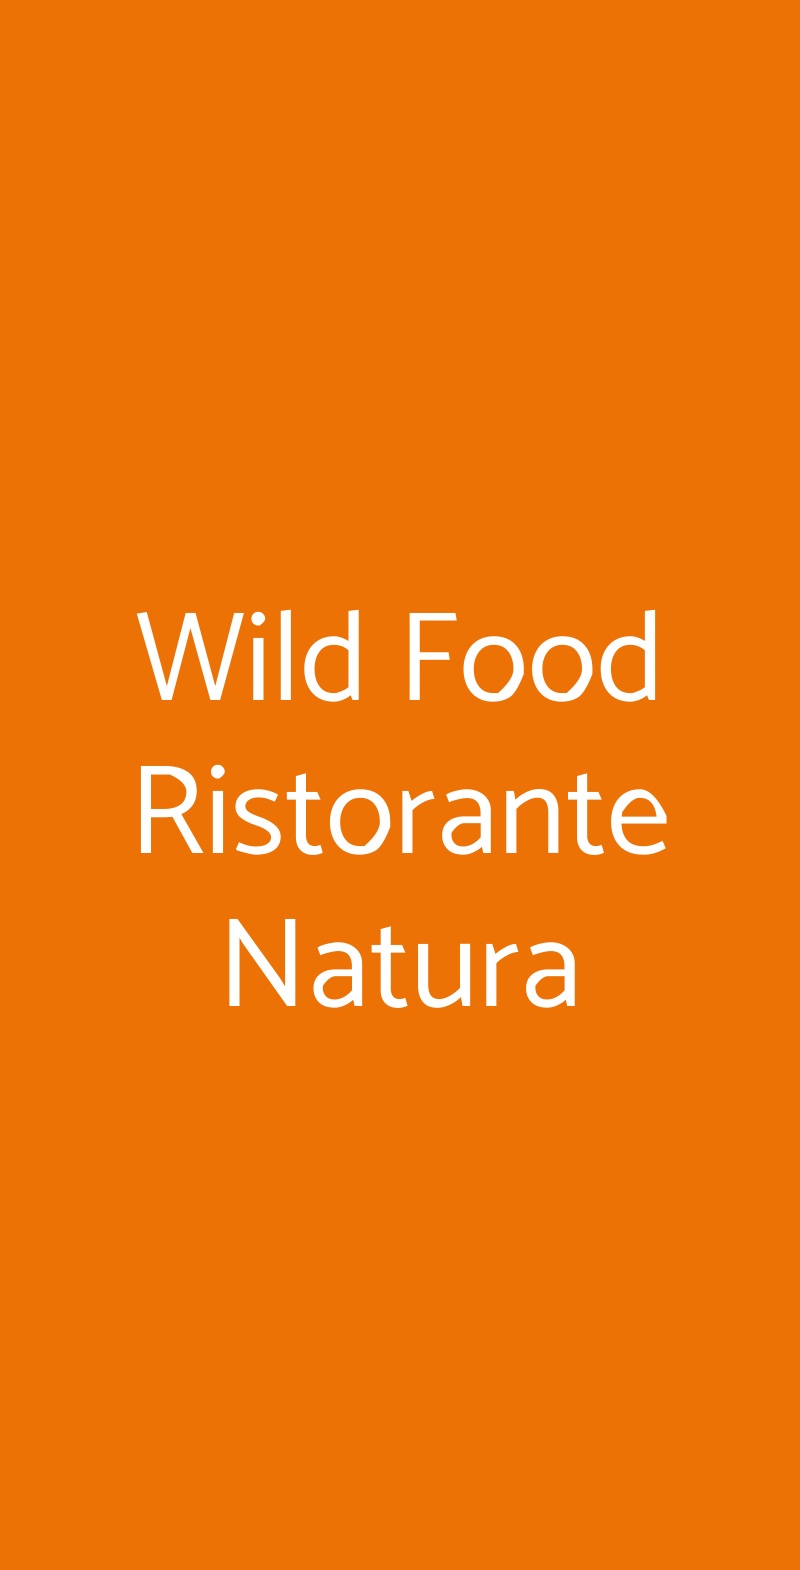 Wild Food Ristorante Natura Macerata menù 1 pagina